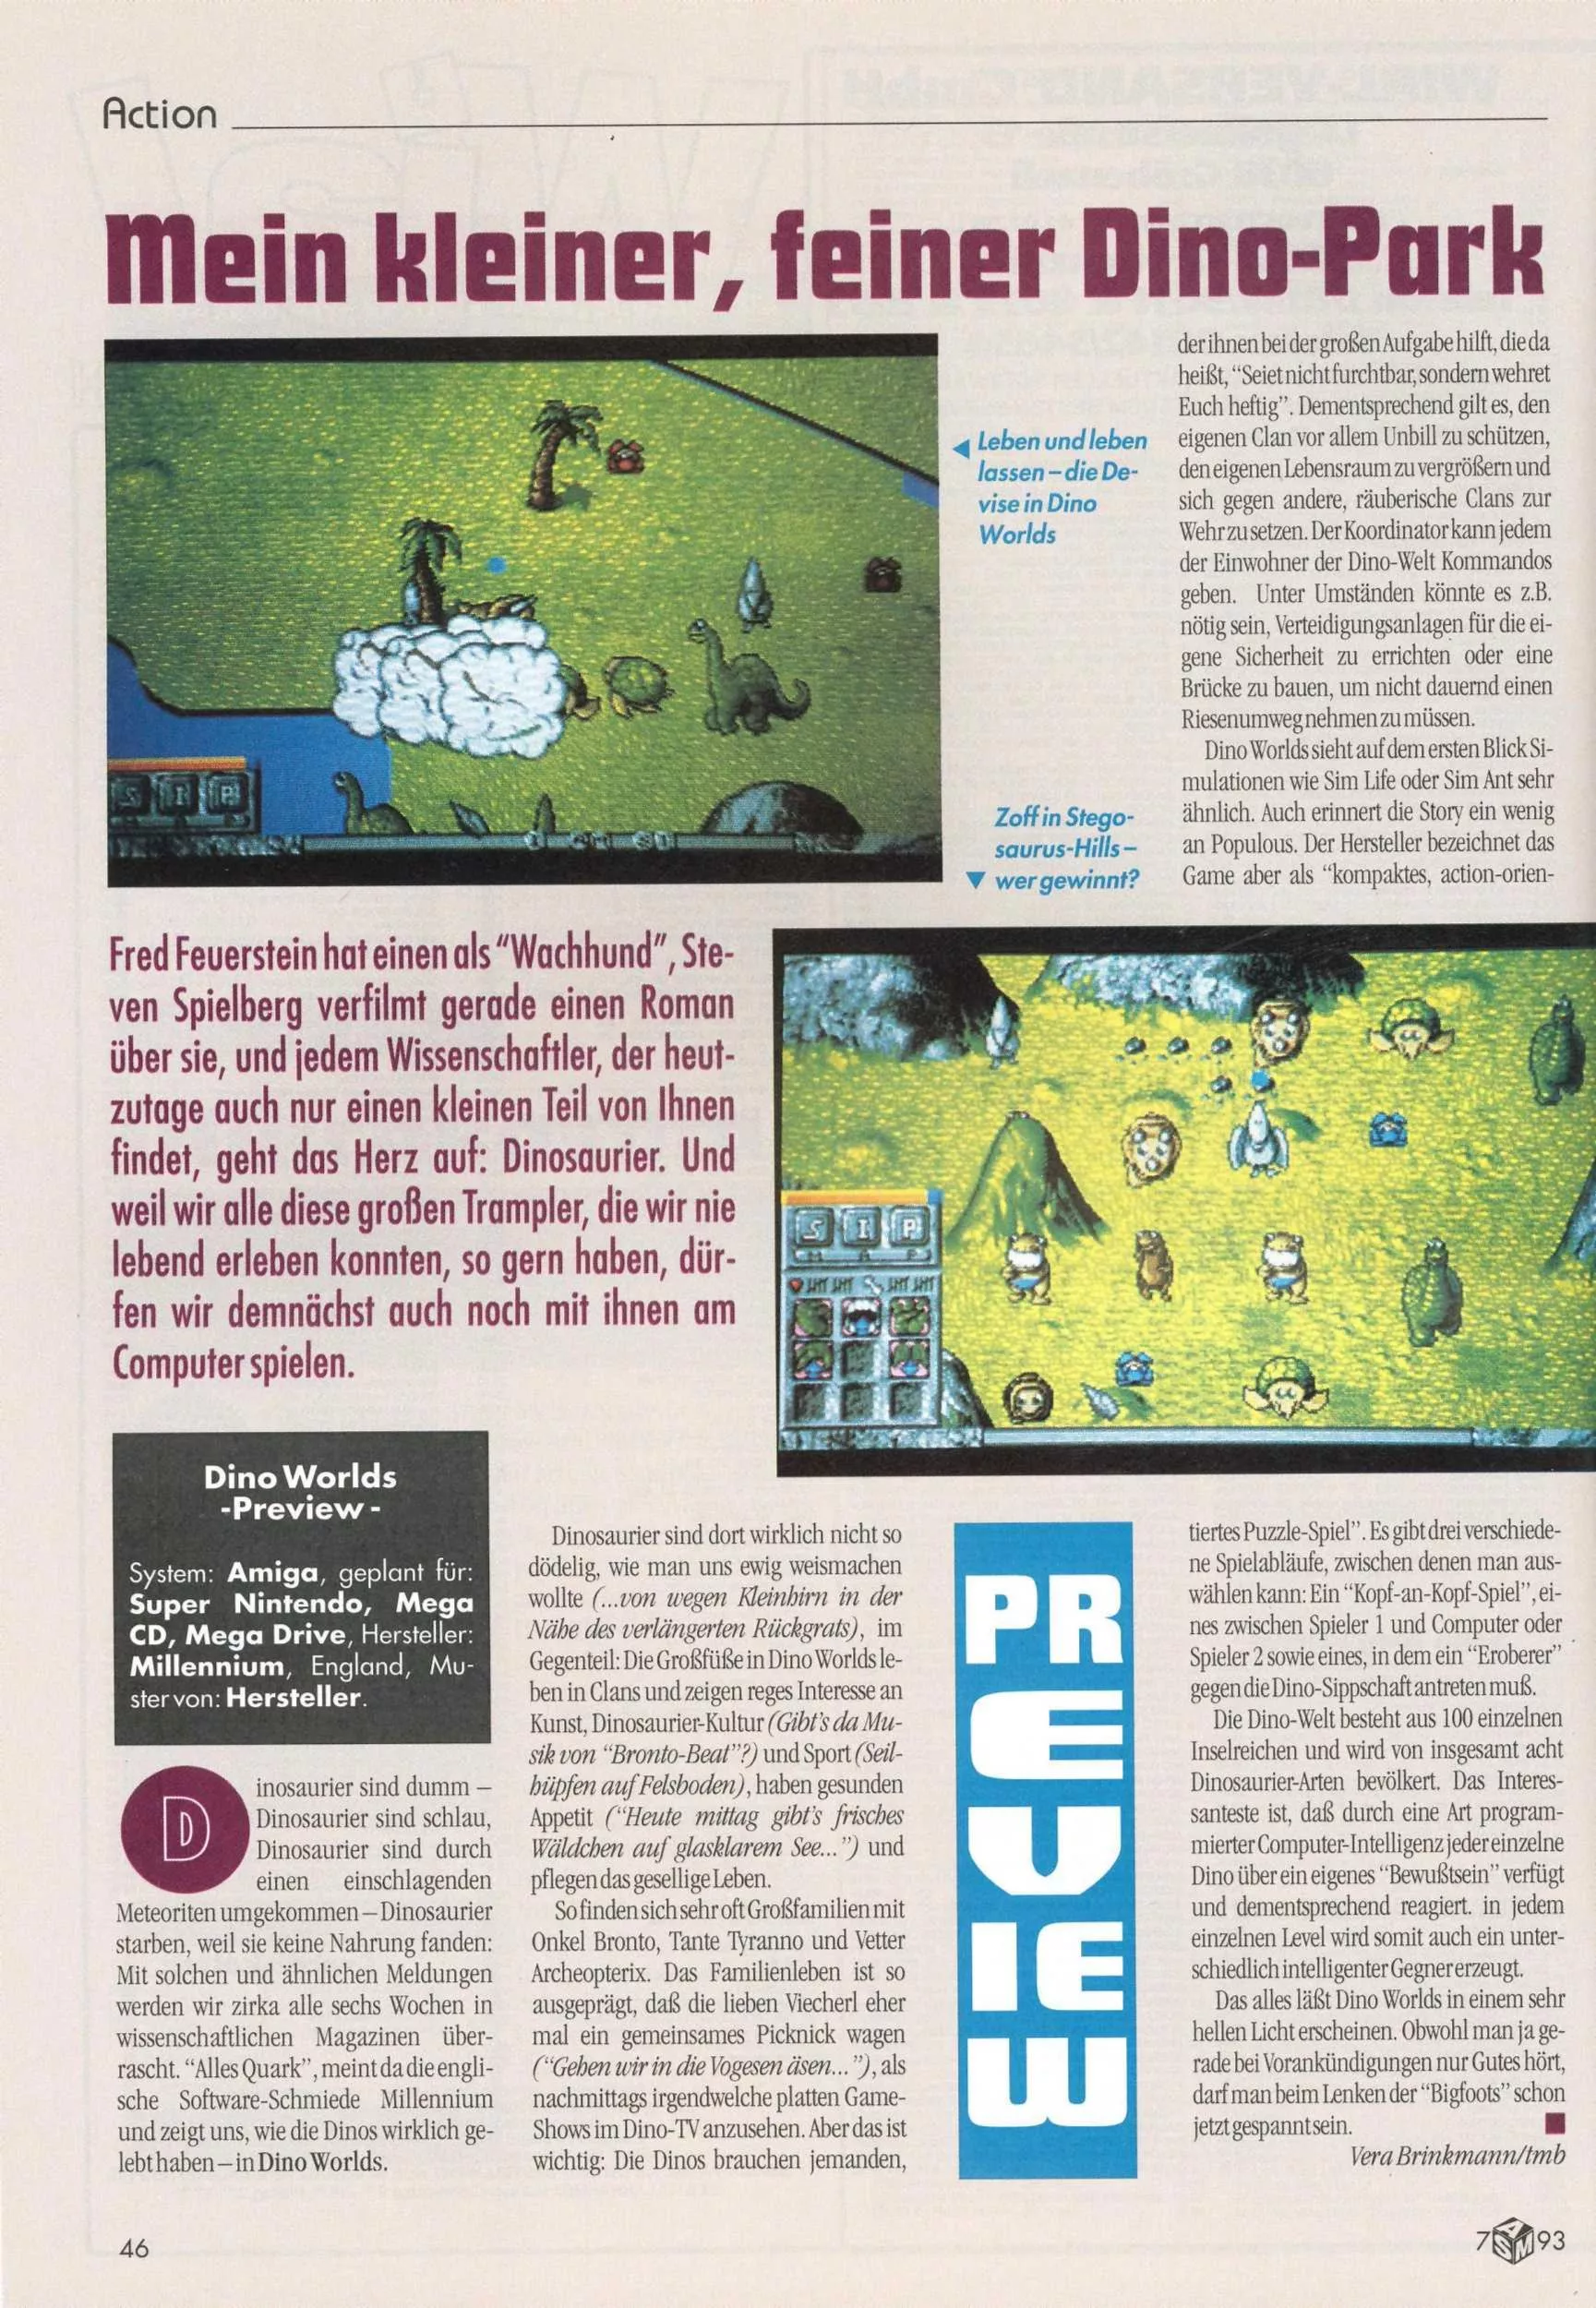 Dino Worlds (Amiga, SNES, Mega Drive) - Games That Weren't